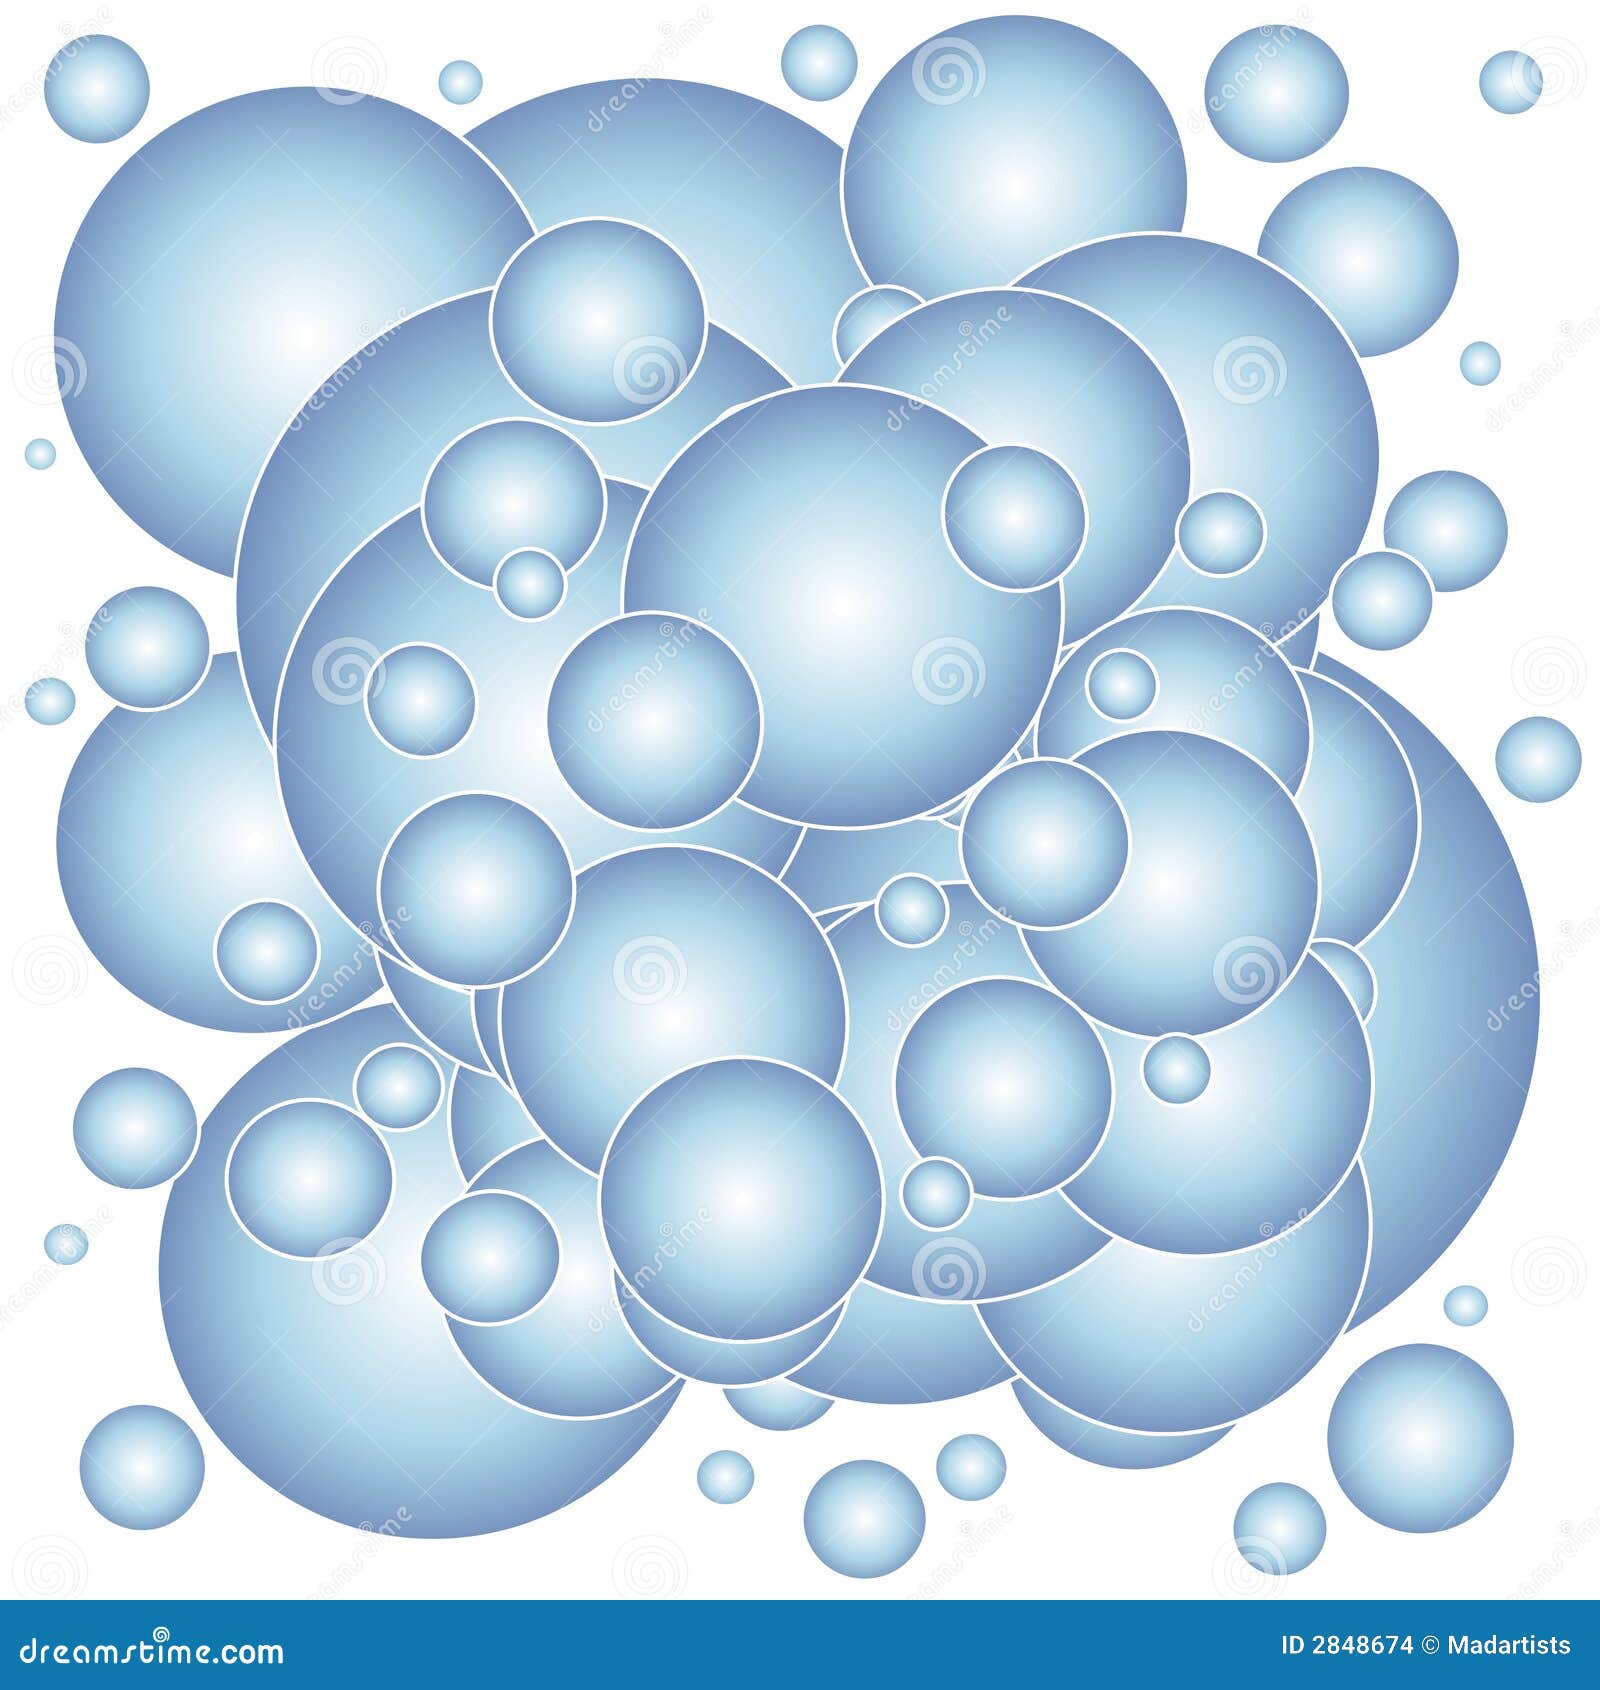 Soap Suds Bubbles Clip Art stock illustration. 